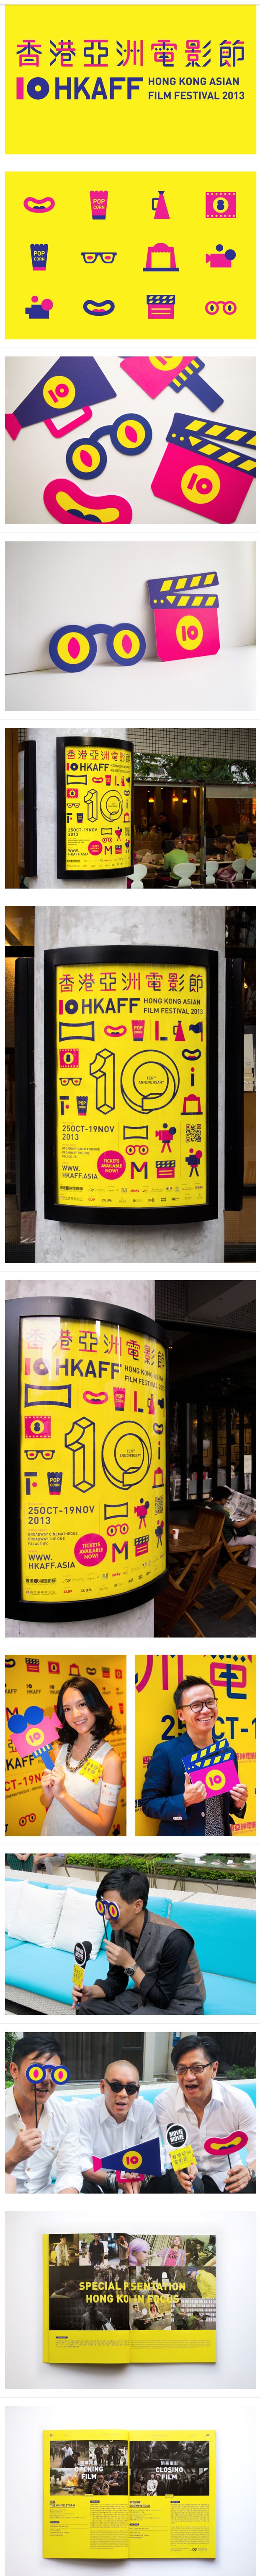 HKAFF香港亚洲电影节